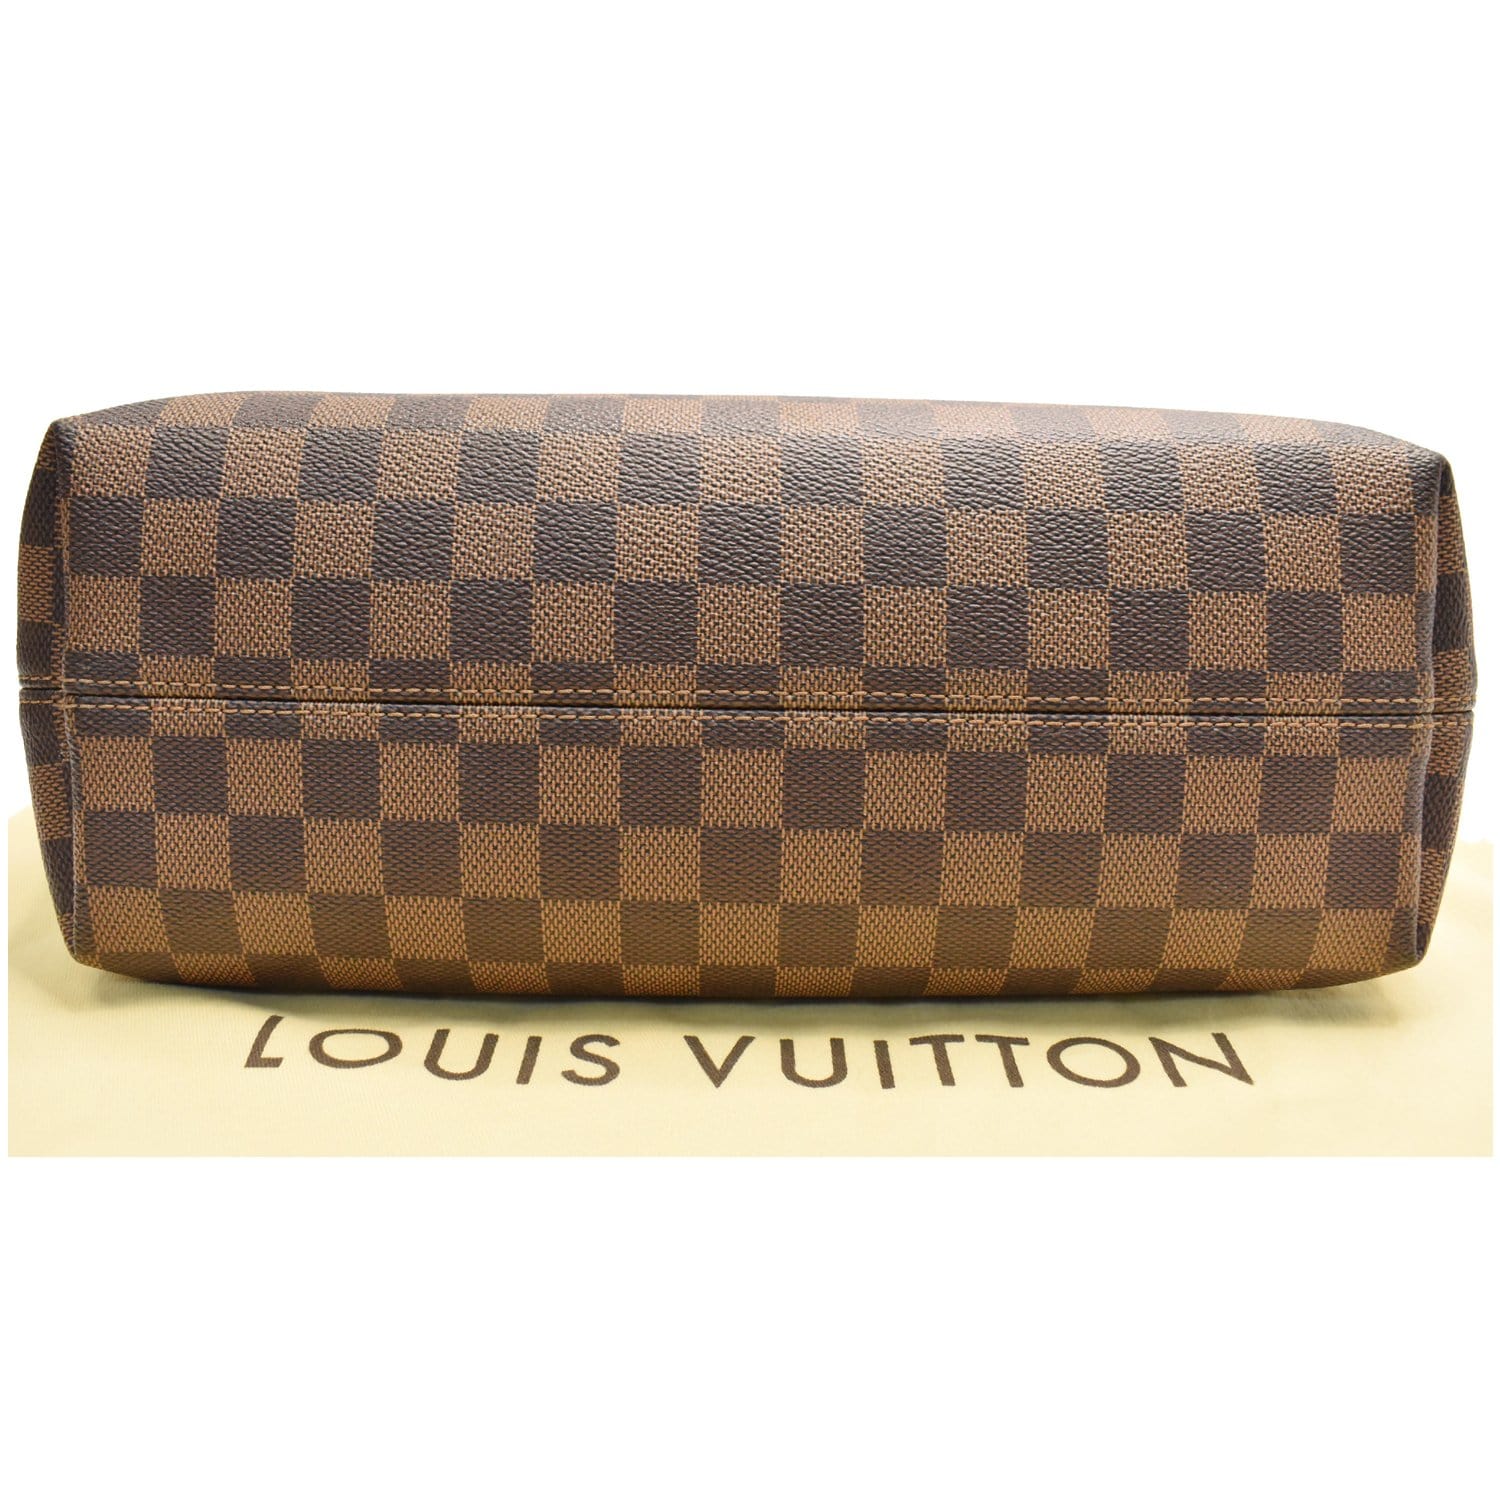 Louis Vuitton Graceful Pm Damier Ebene - 3 For Sale on 1stDibs